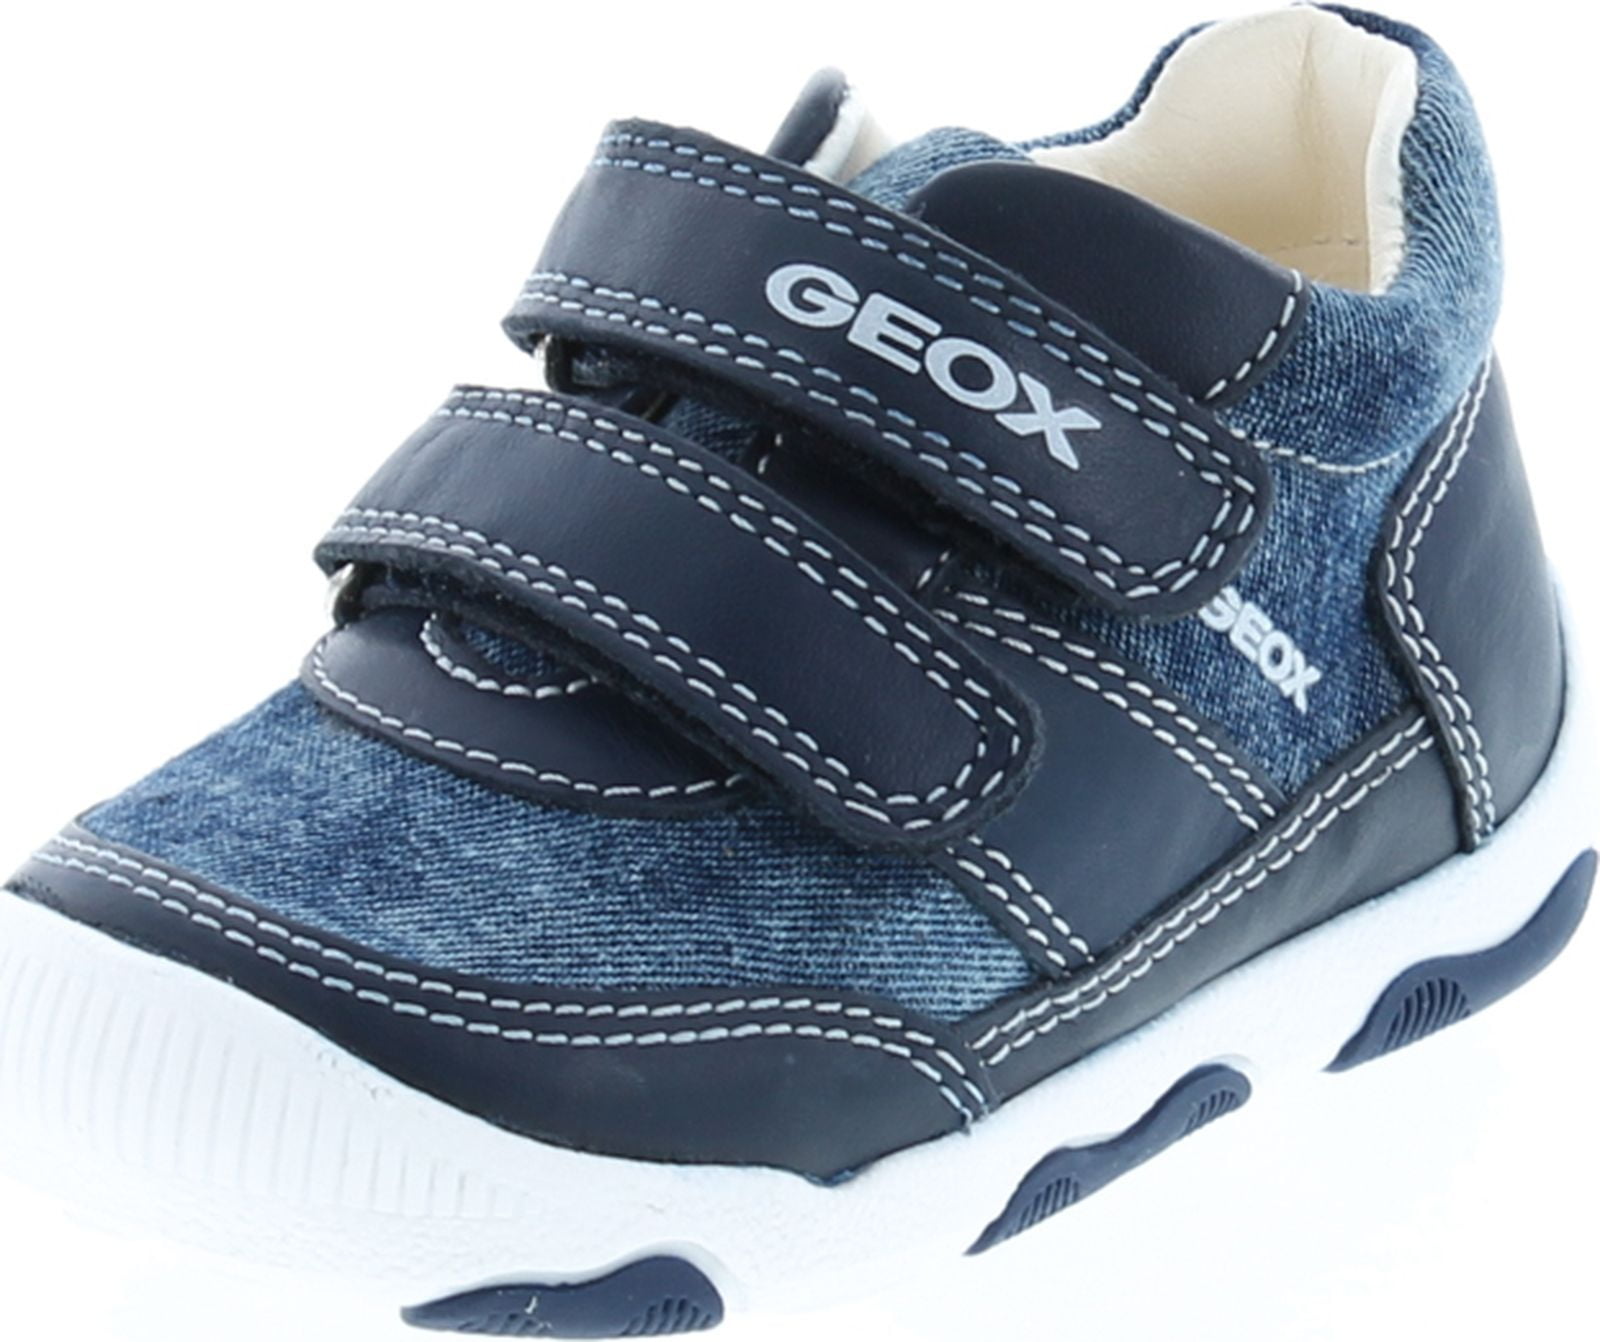 Uitdrukking stikstof Stapel Geox Boys Baby Balu Fashion Sneakers, Navy/Royal, 20 - Walmart.com